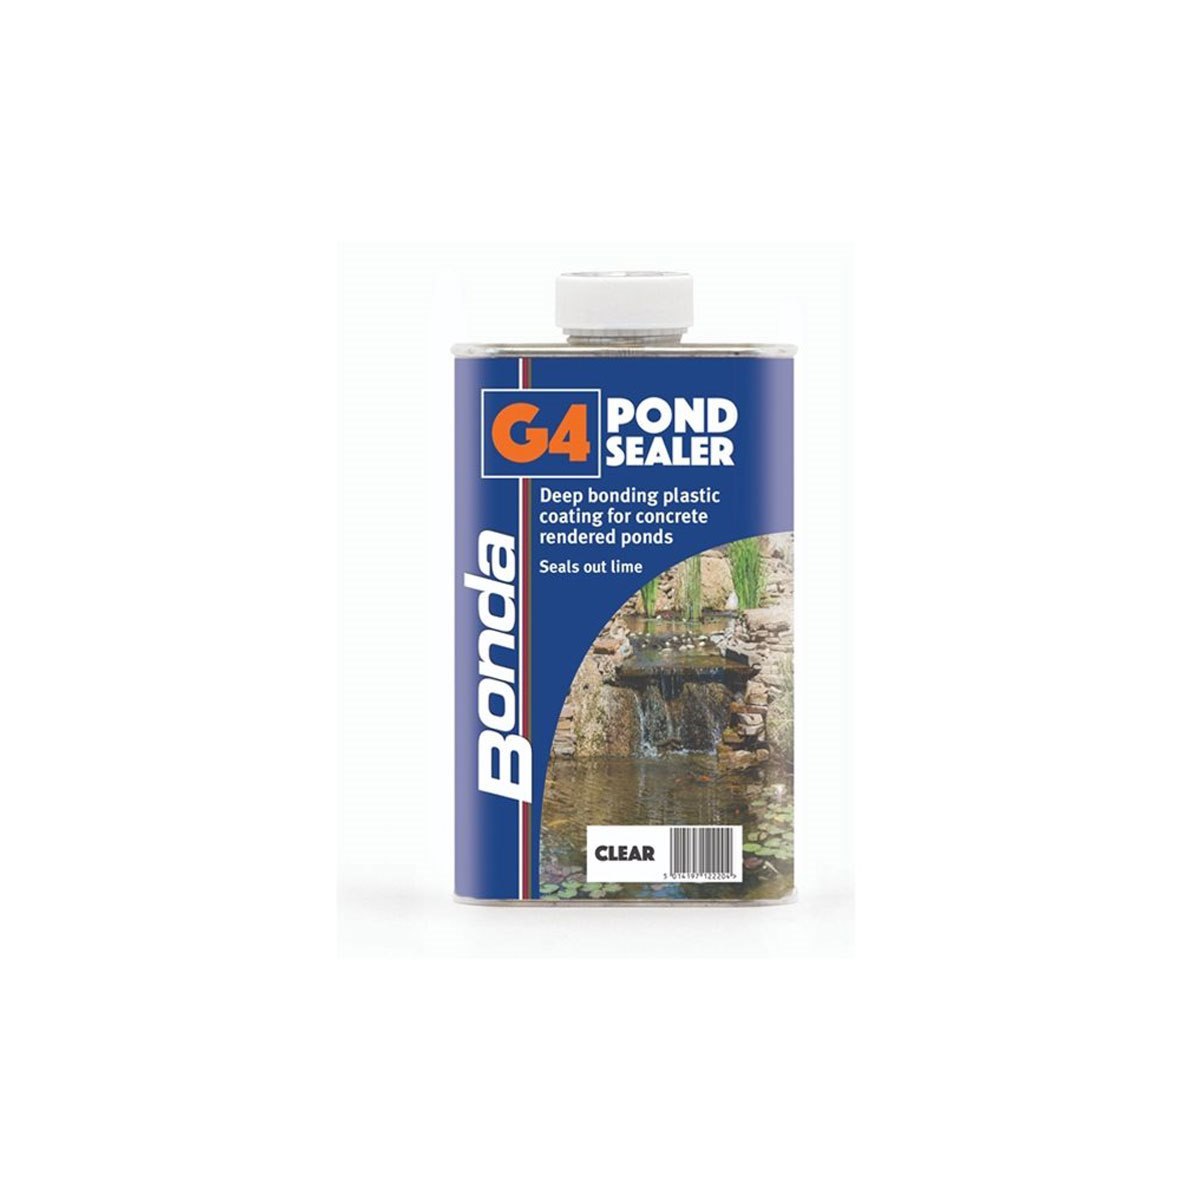 Bonda G4 Pond Sealer Clear 1kg